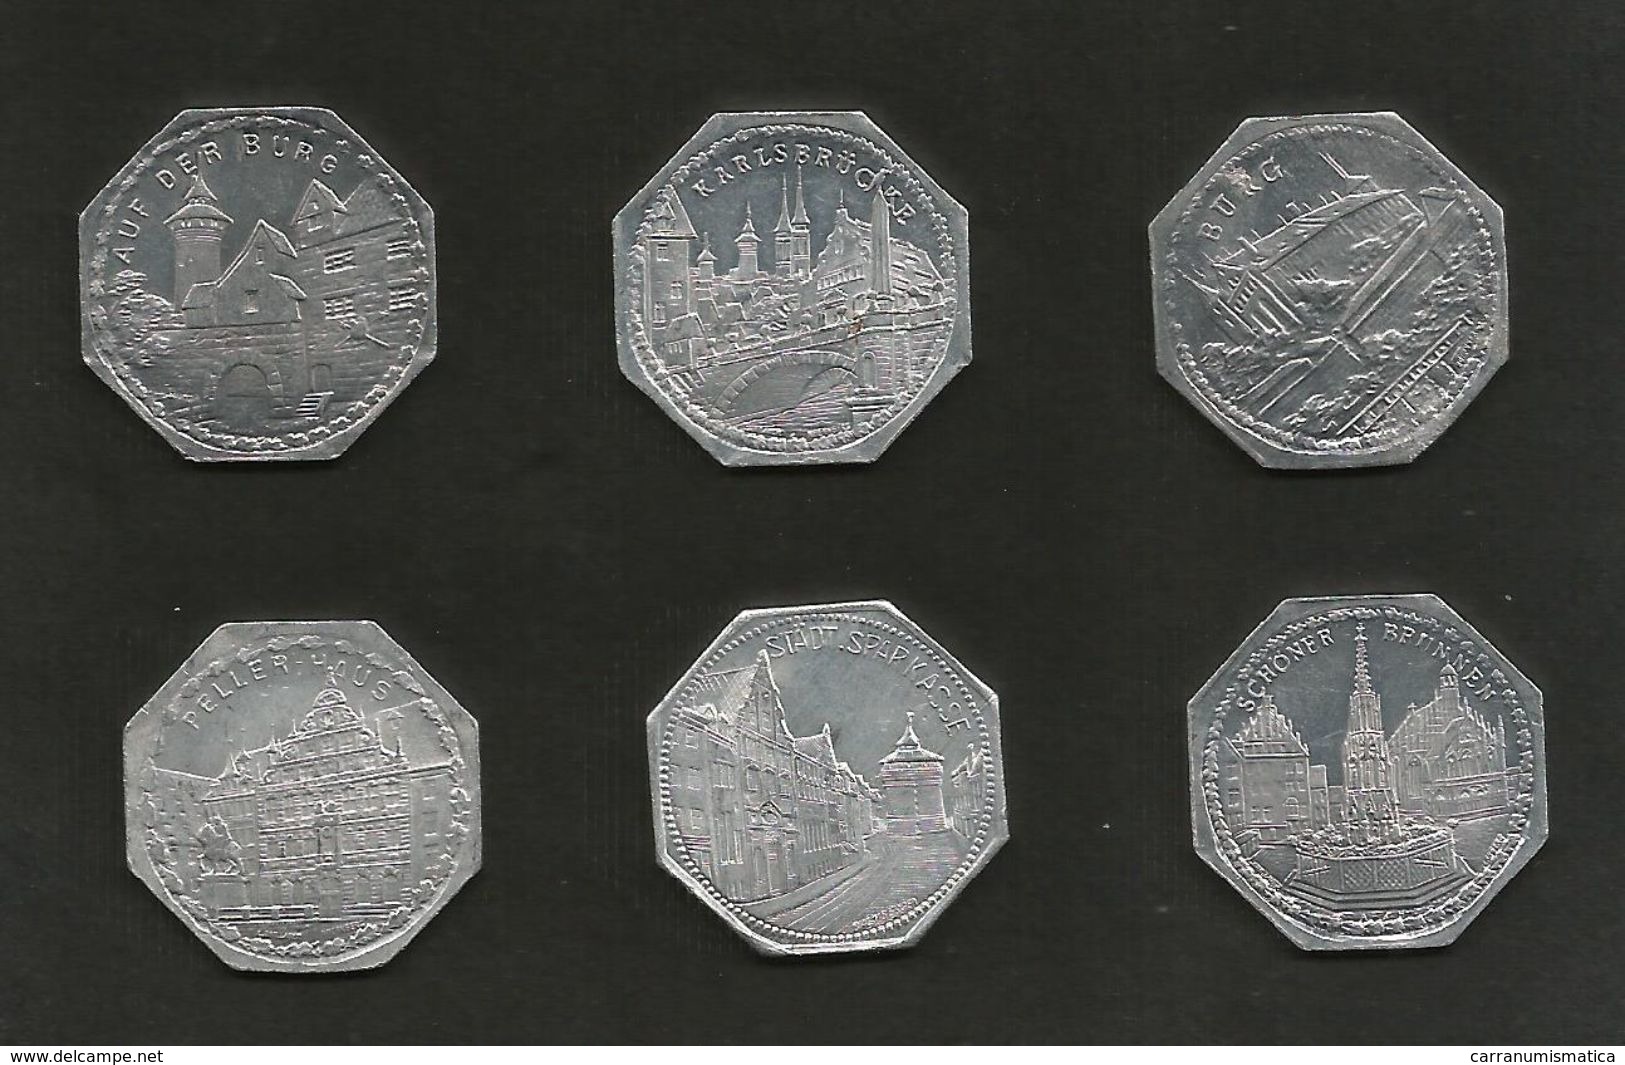 DEUTSCHLAND / GERMANY - NURNBERG STRASSENBAHN - 20 Pfennig (Monuments) - Lot Of 6 Tokens - Monedas/ De Necesidad